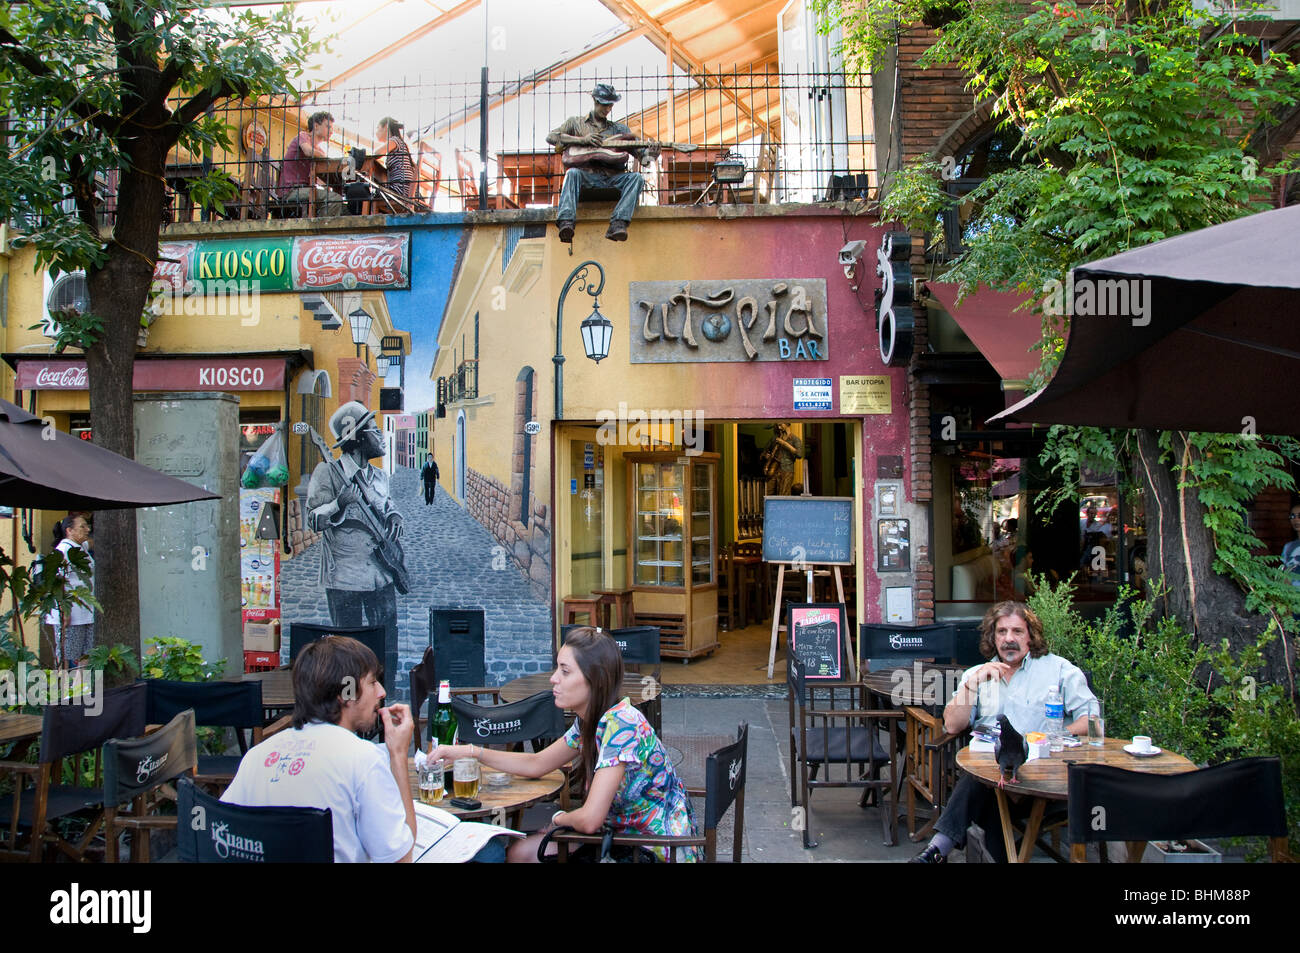 Soho Palermo Viejo Bar Cafe Pub Buenos Aires Restaurant Argentina Stock